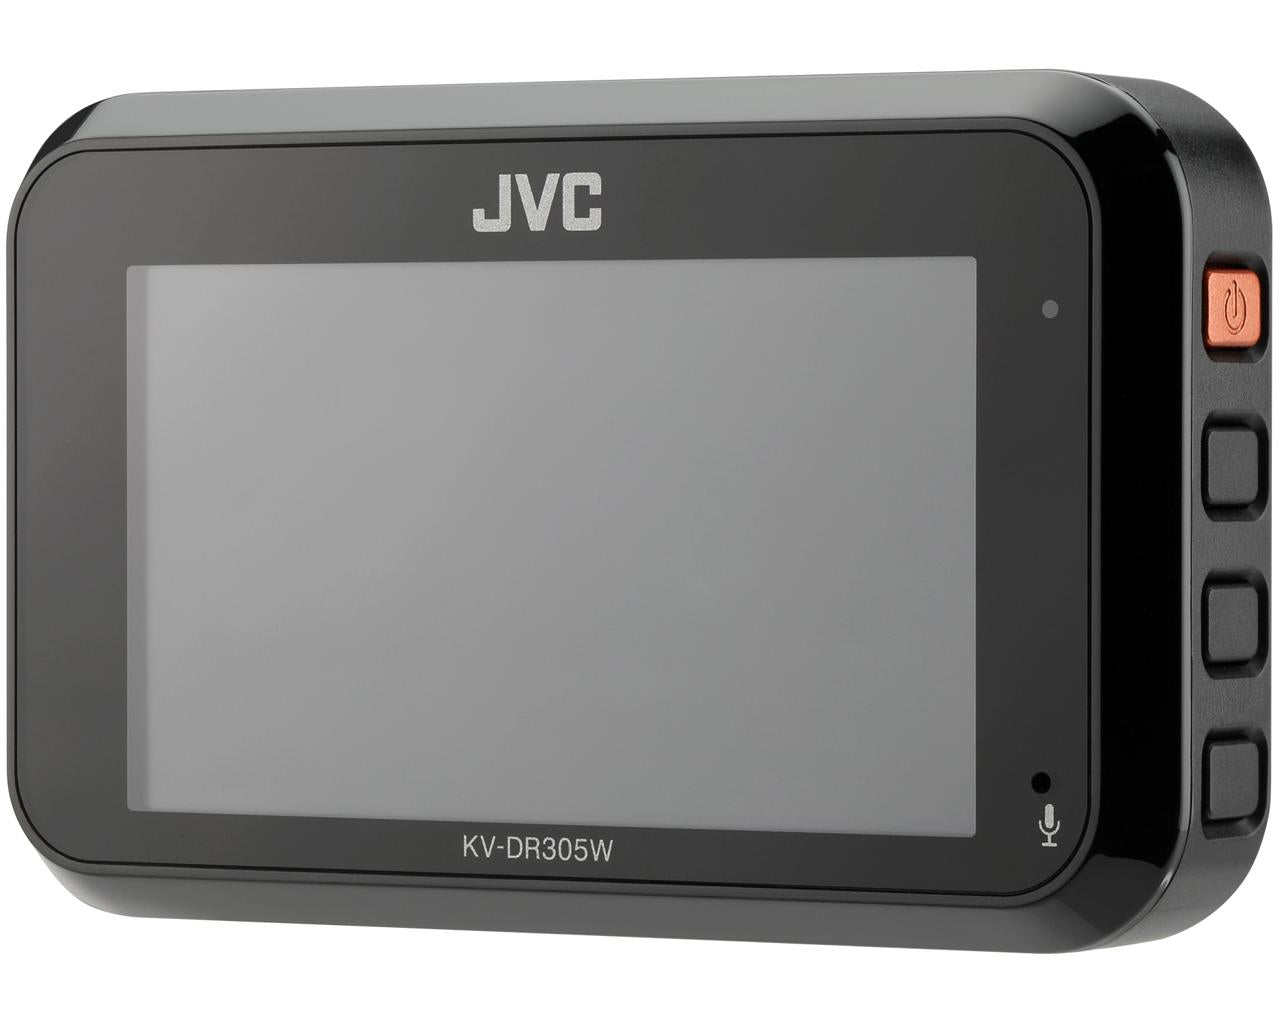 JVC KV-DR305W 1920x1080p Full HD Recorder GPS Dash Cam for Car, 2.7" LCD Screen Dashboard Camera, Built-in Wi-Fi, 3-Axis G-Force Sensor, Night Enhancement WDR, Includes 16GB Class 10 microSD Card